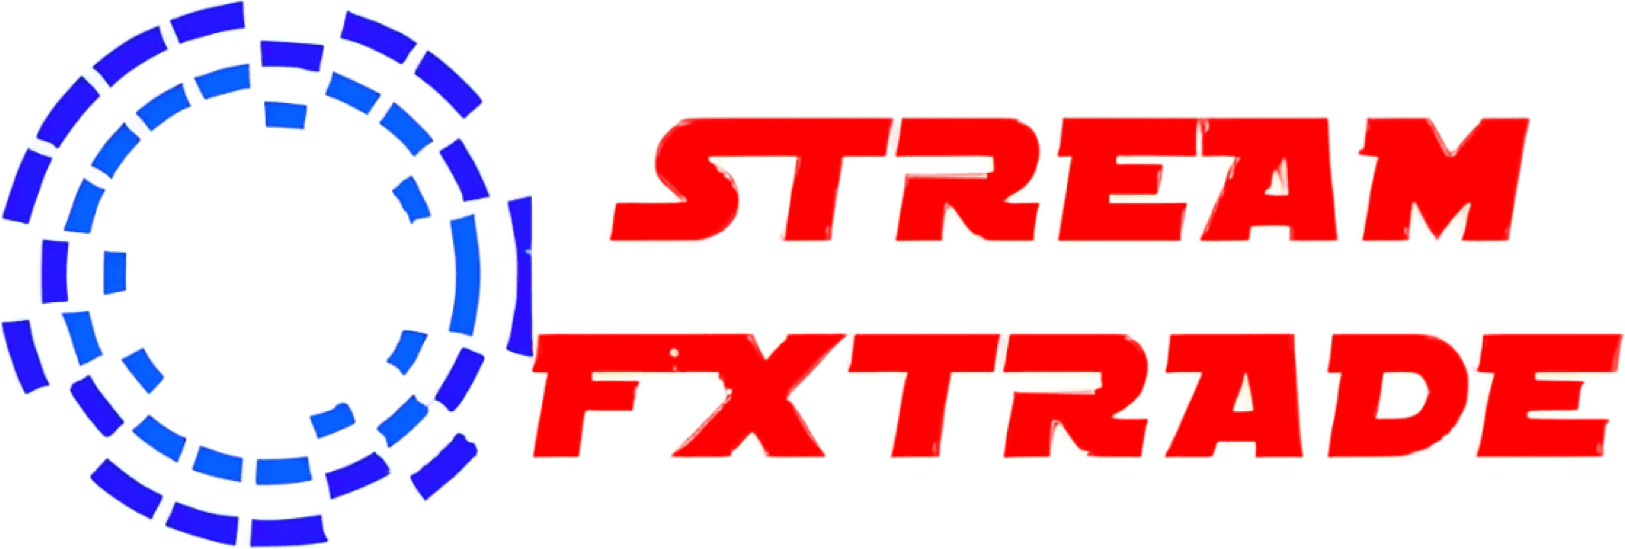 Streamfx